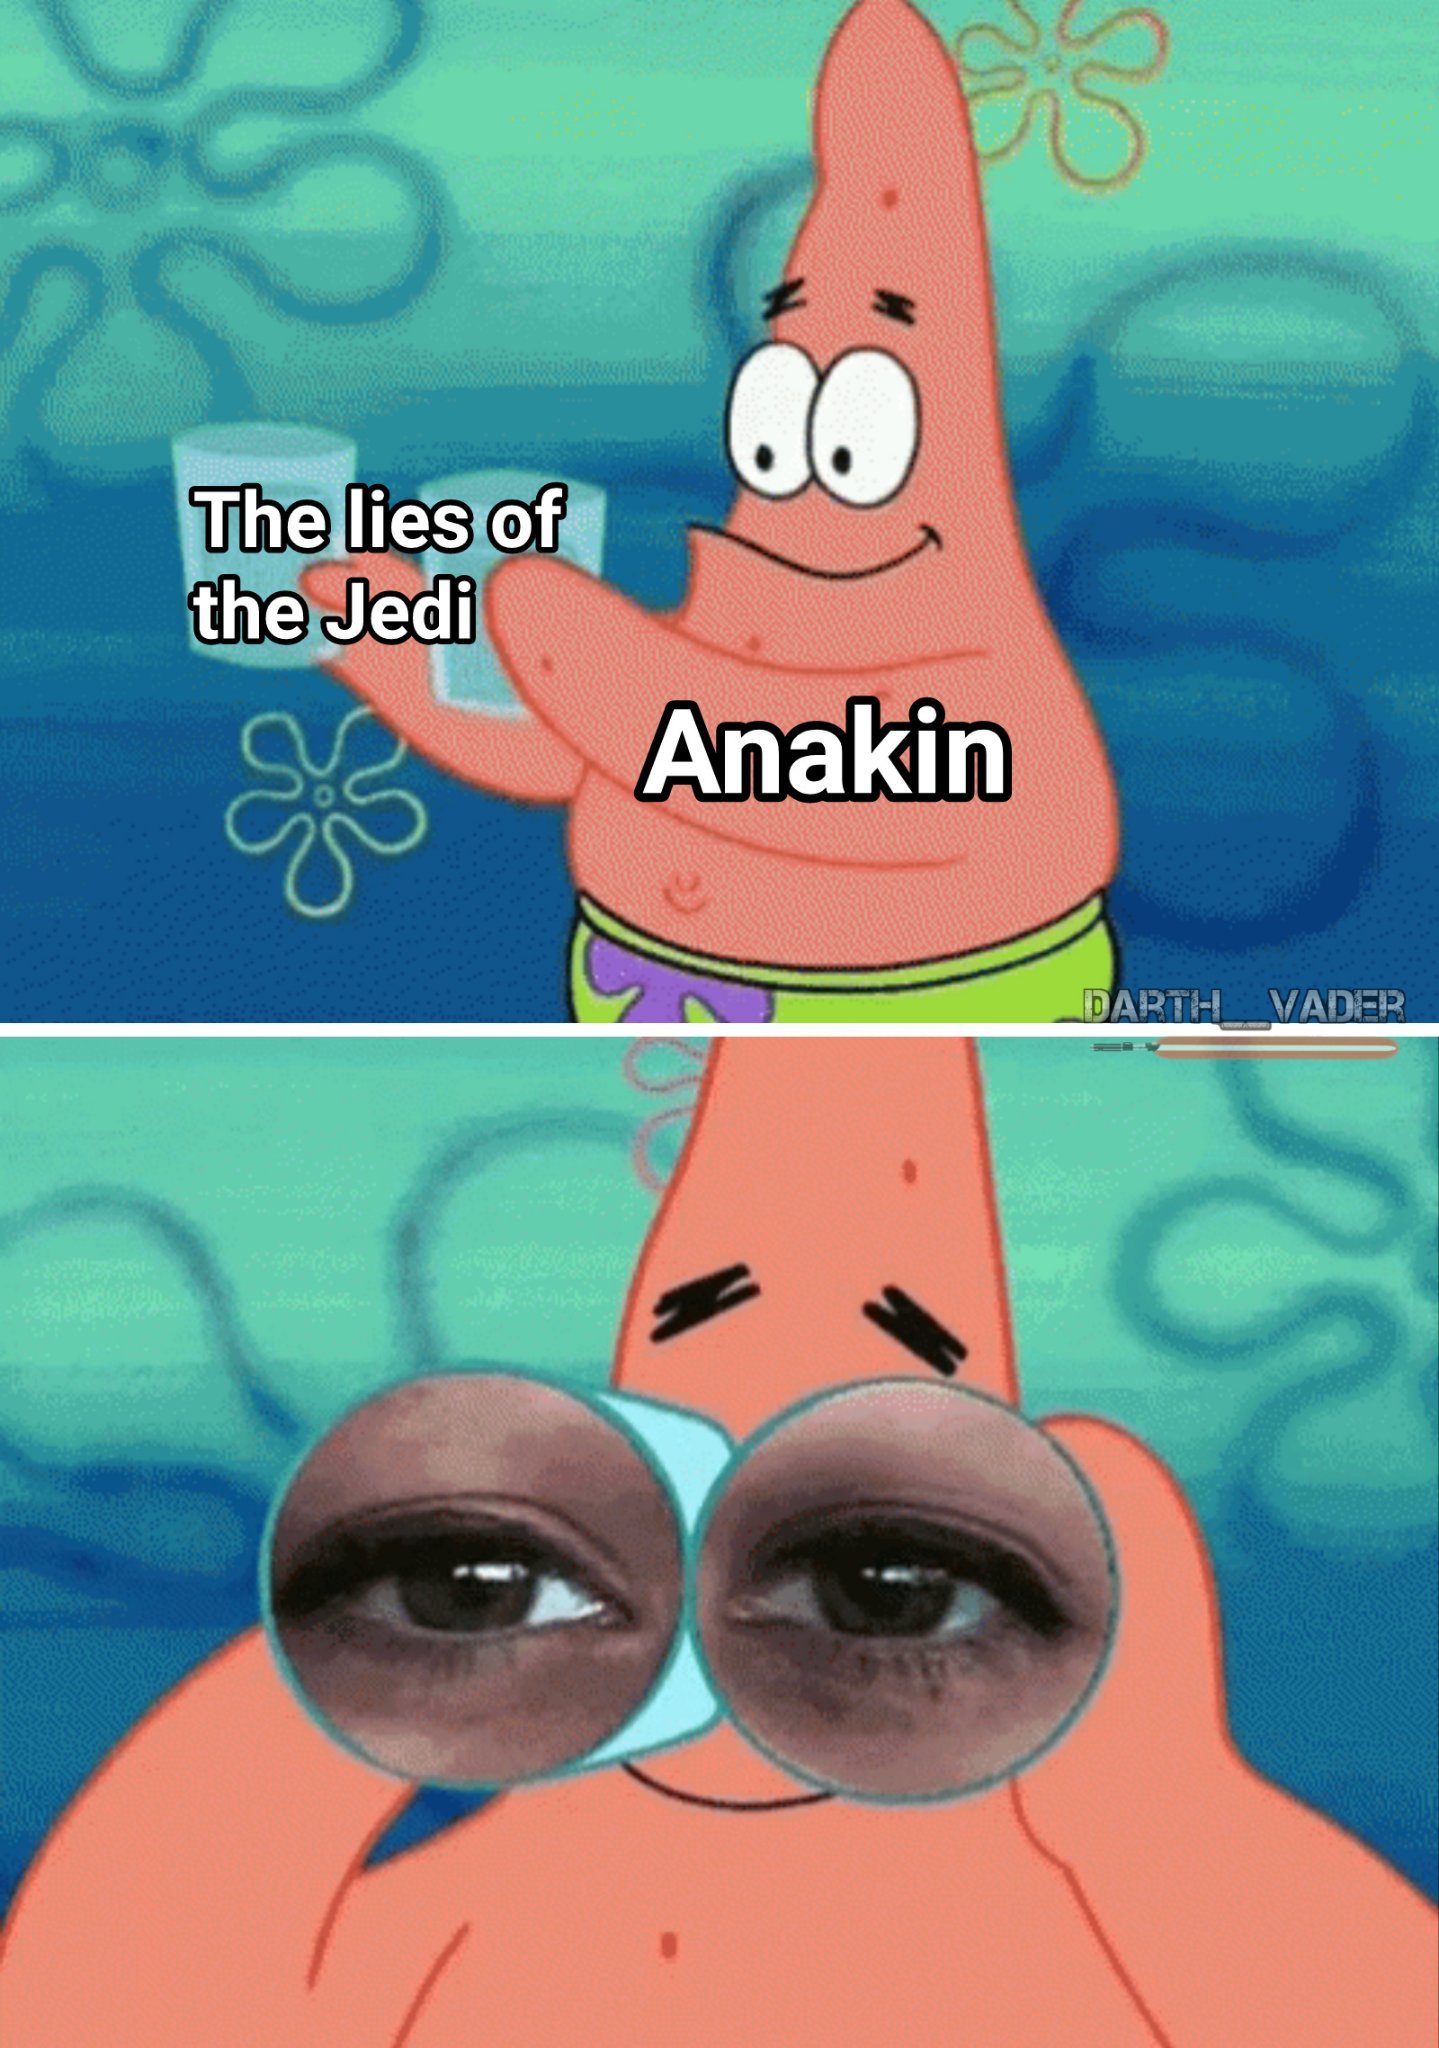 I see through the lies of the Jedi - meme